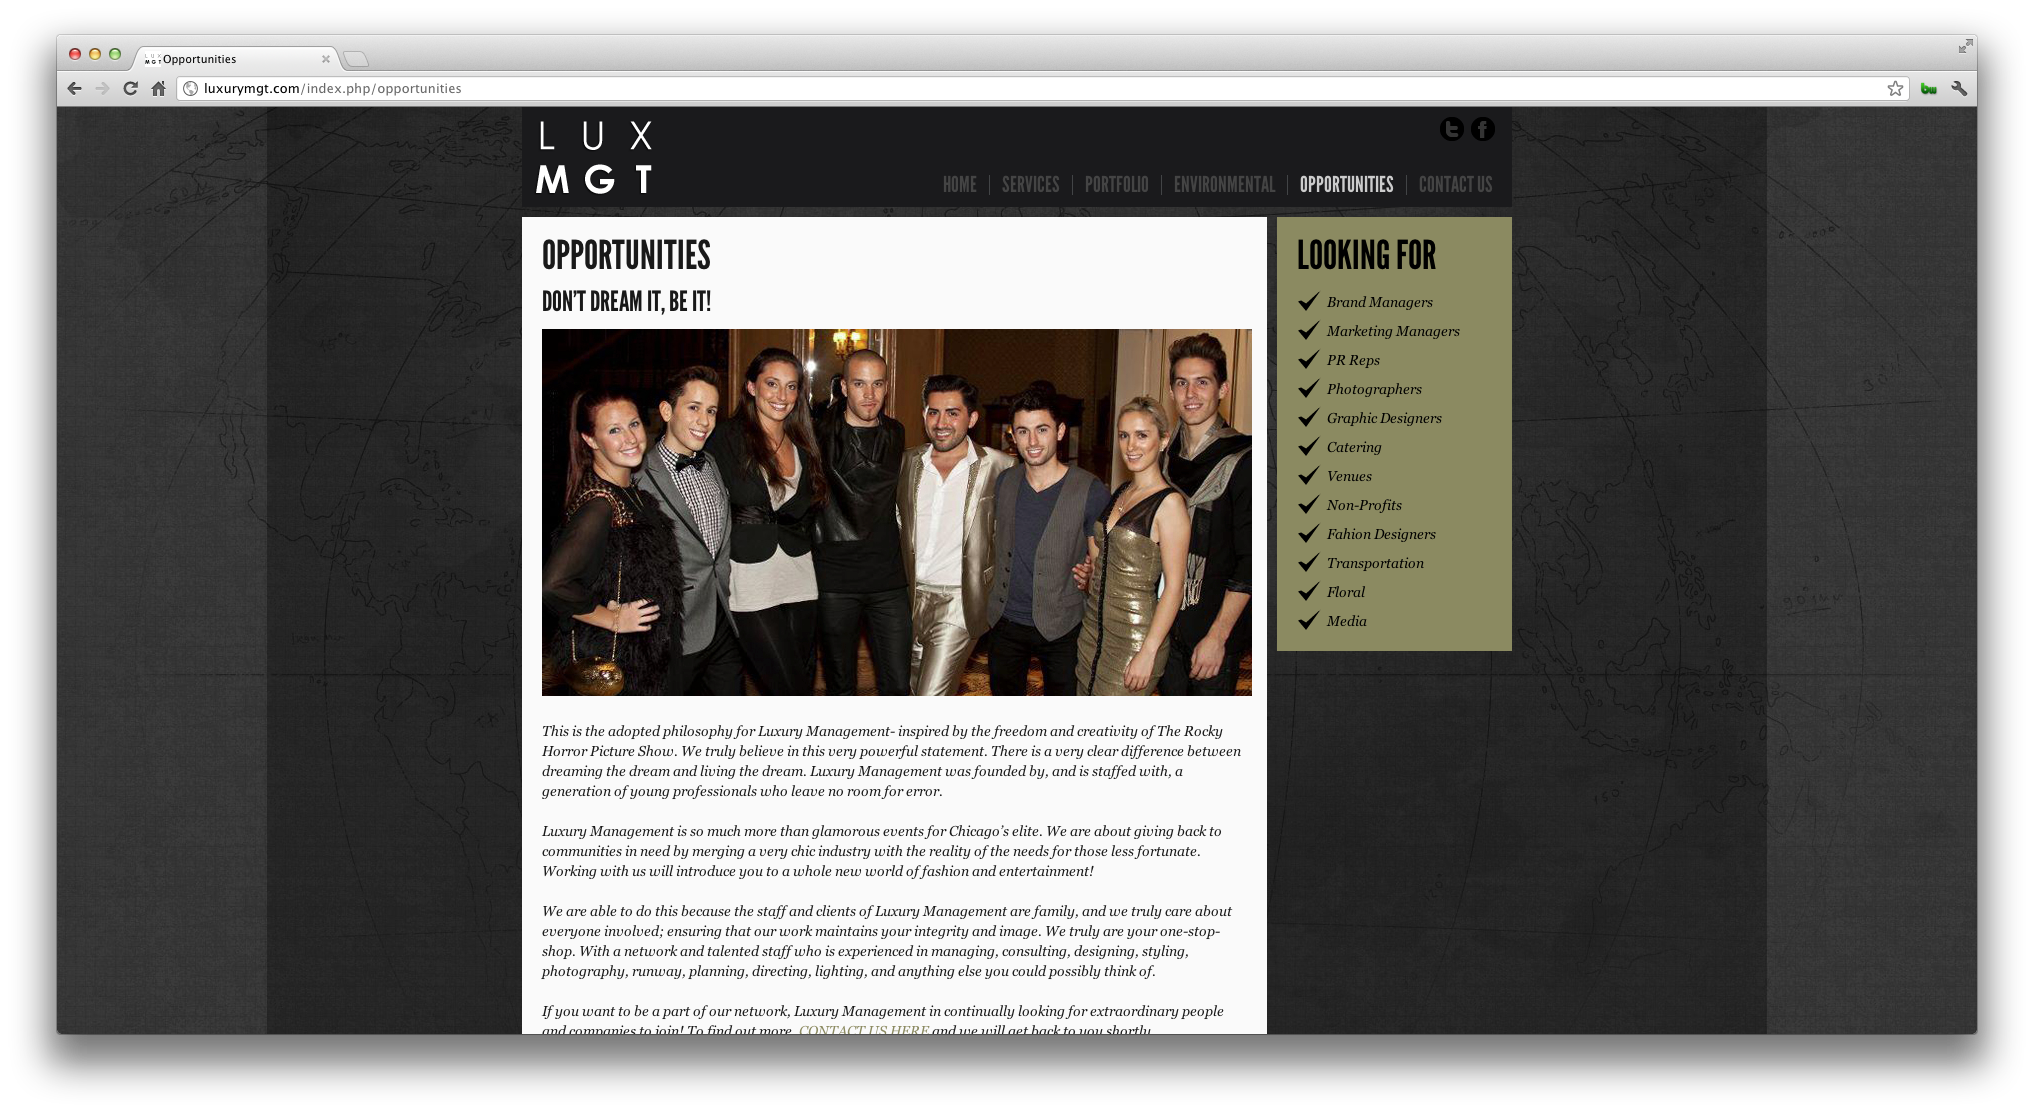 LUX MGT Website